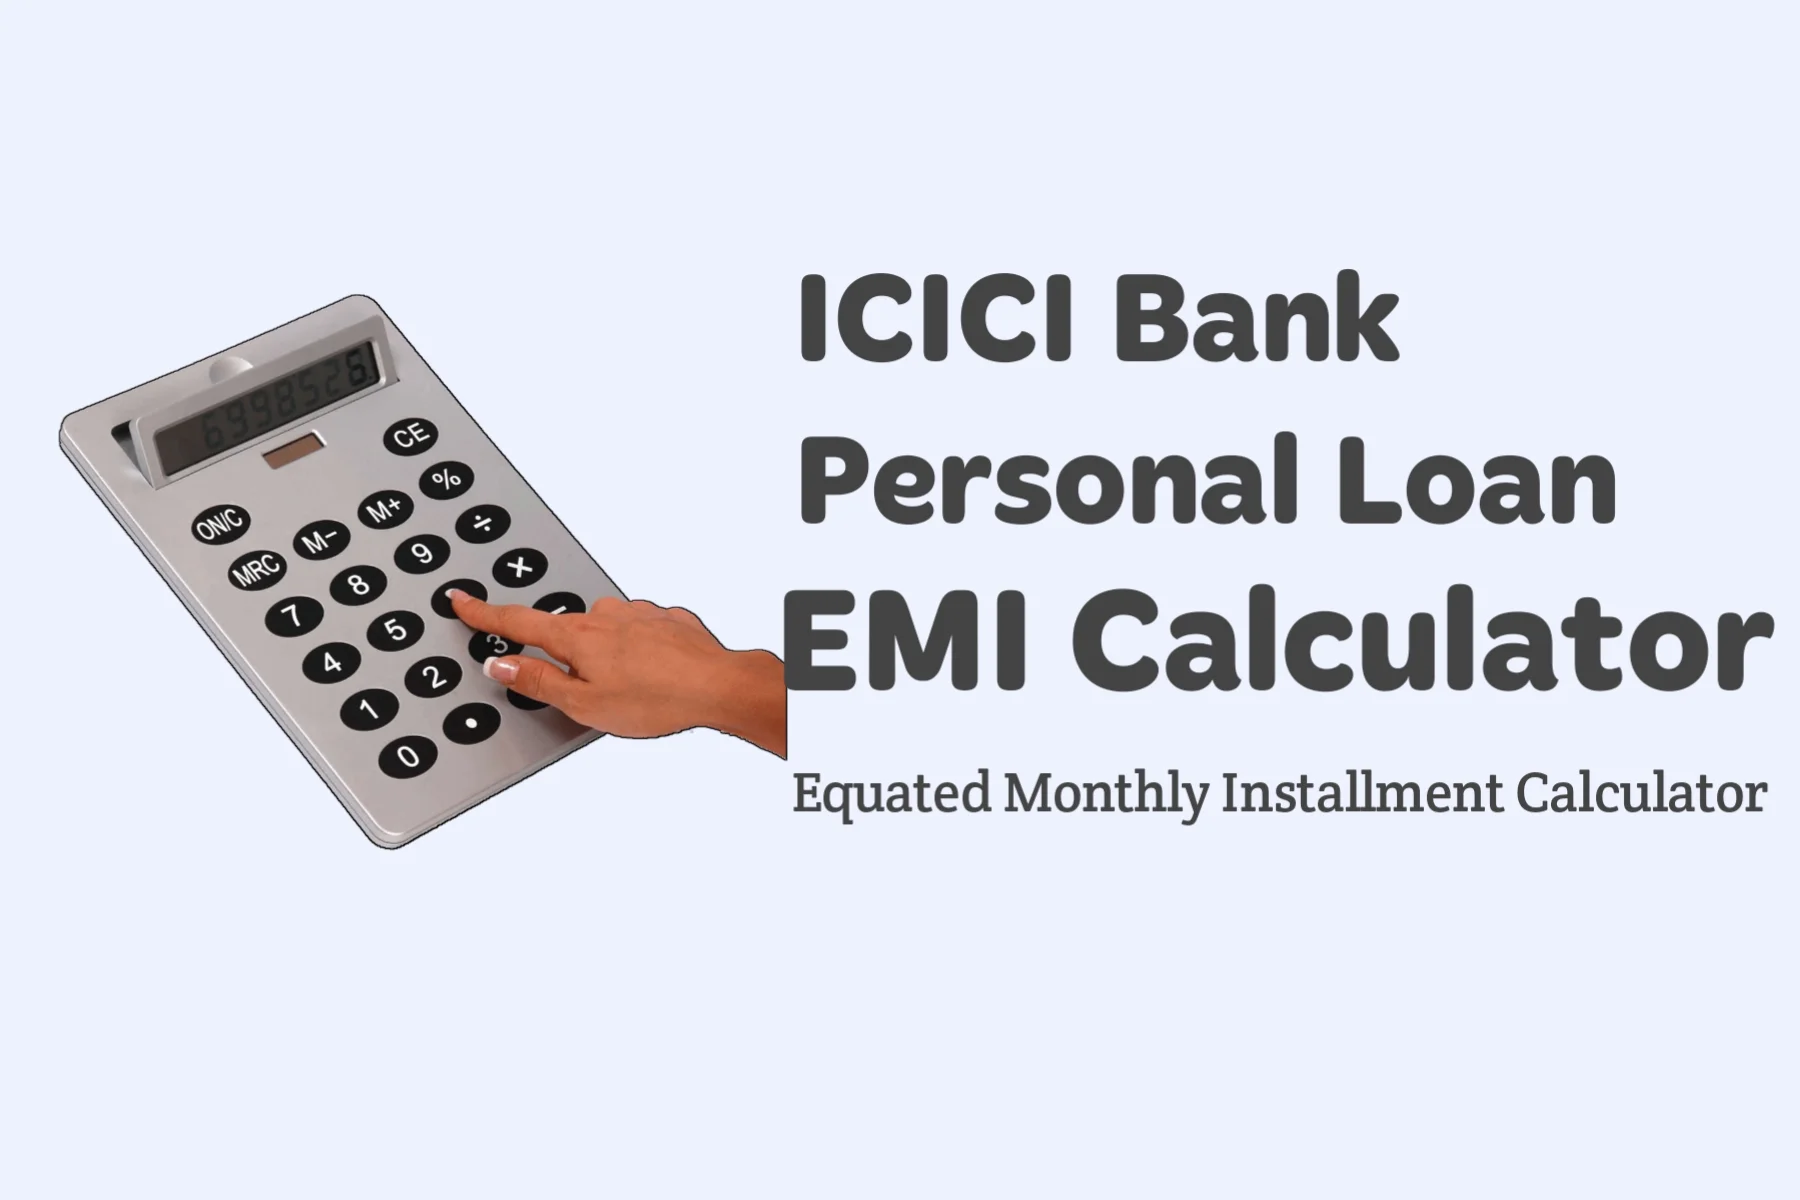 ICICI Bank Personal Loan EMI Calculator